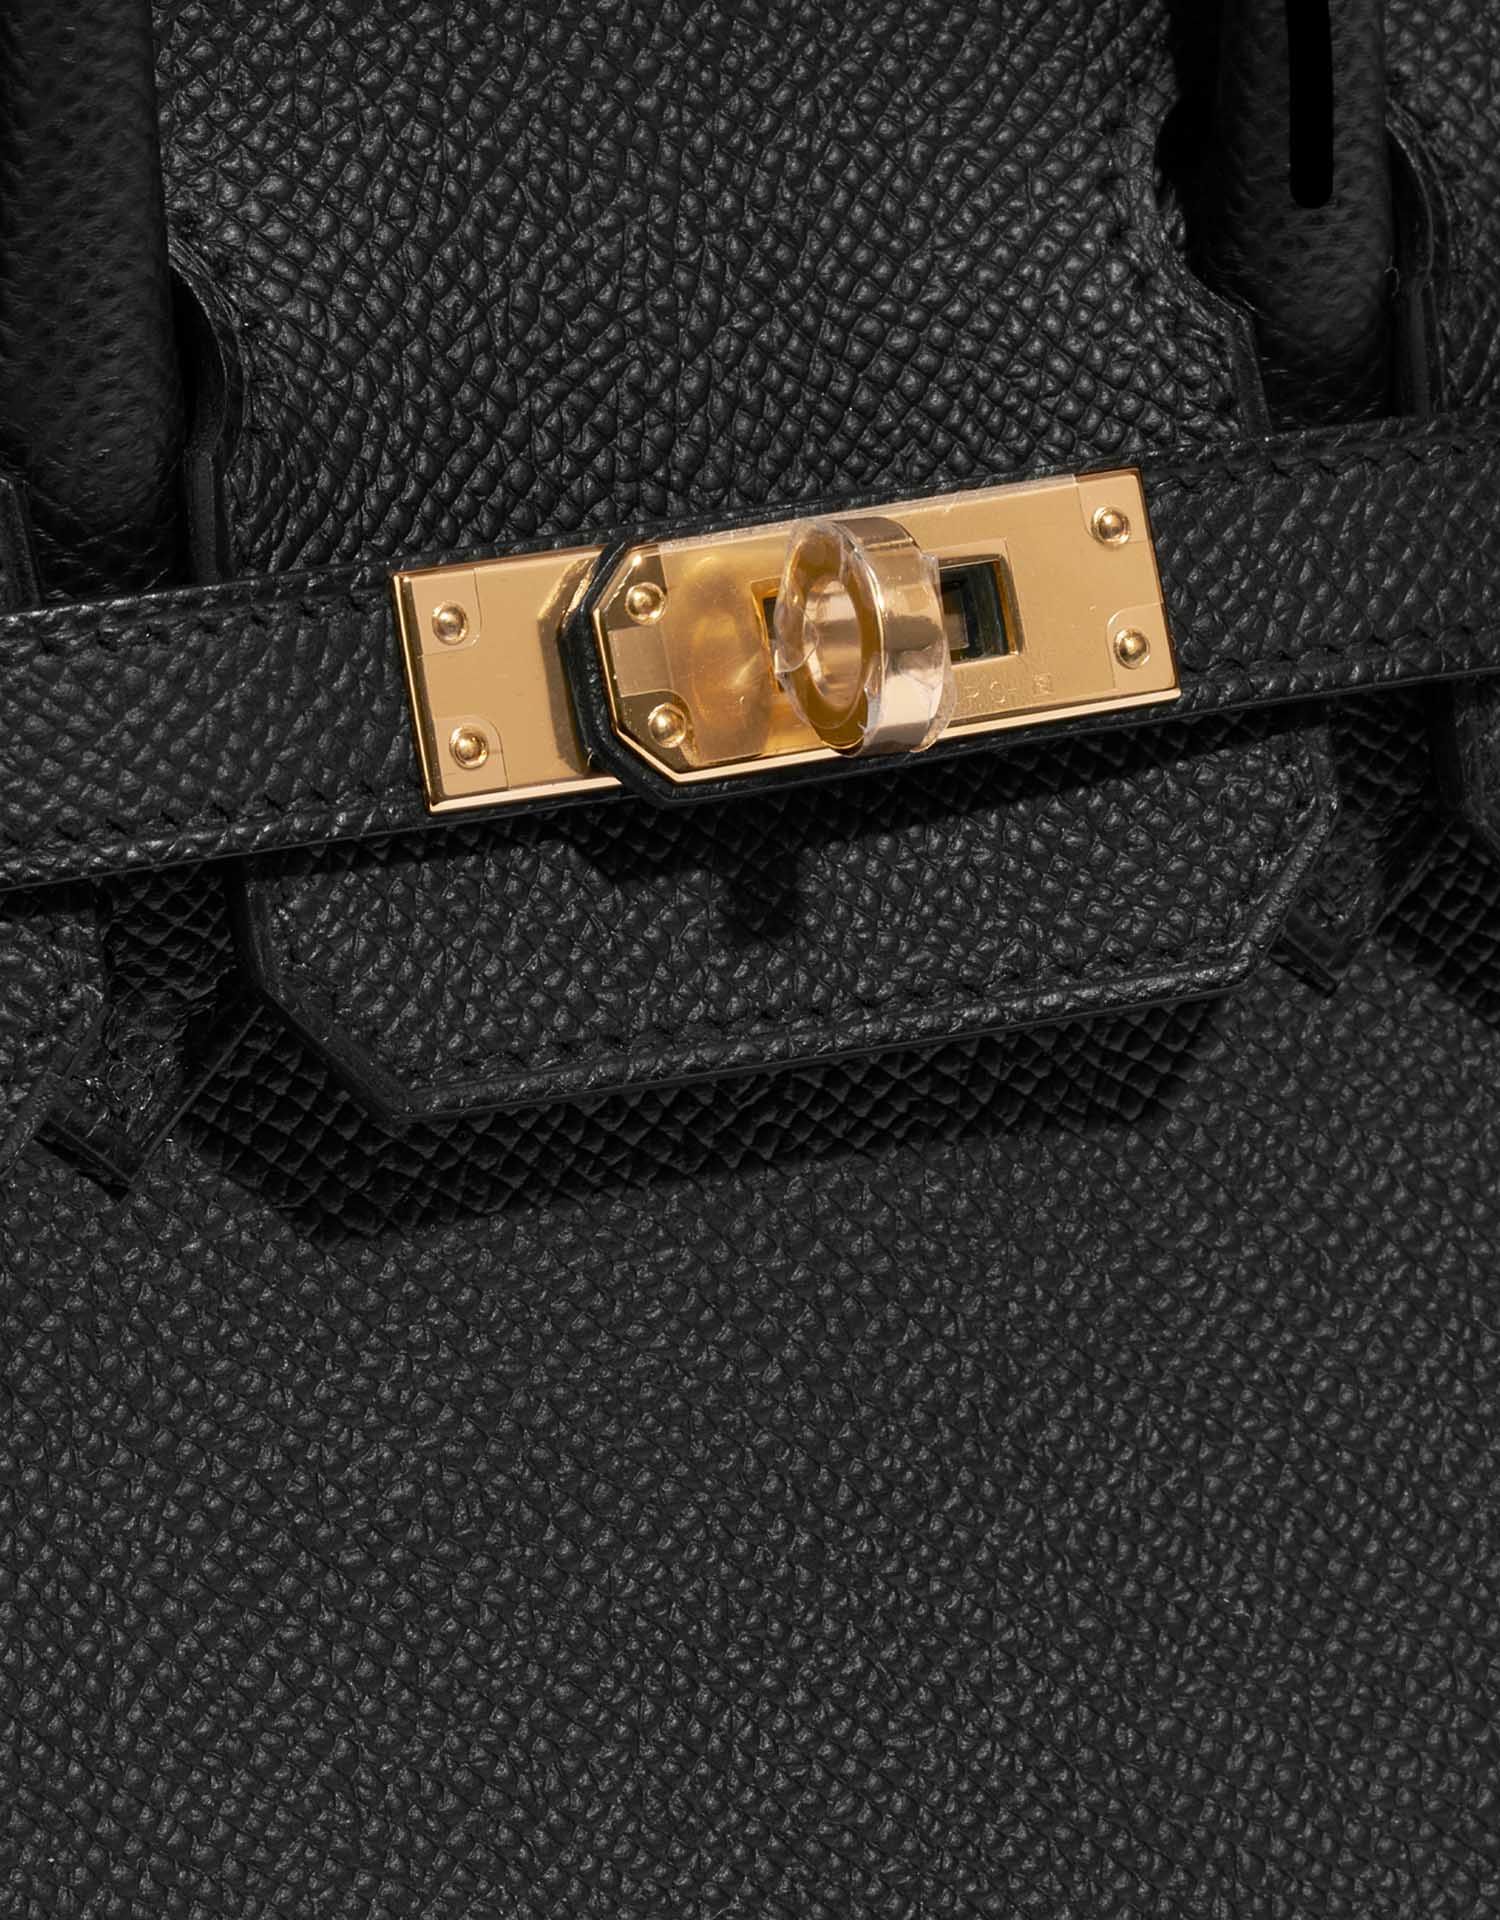 Hermes Birkin Bag Epsom Leather Gold Hardware In Black